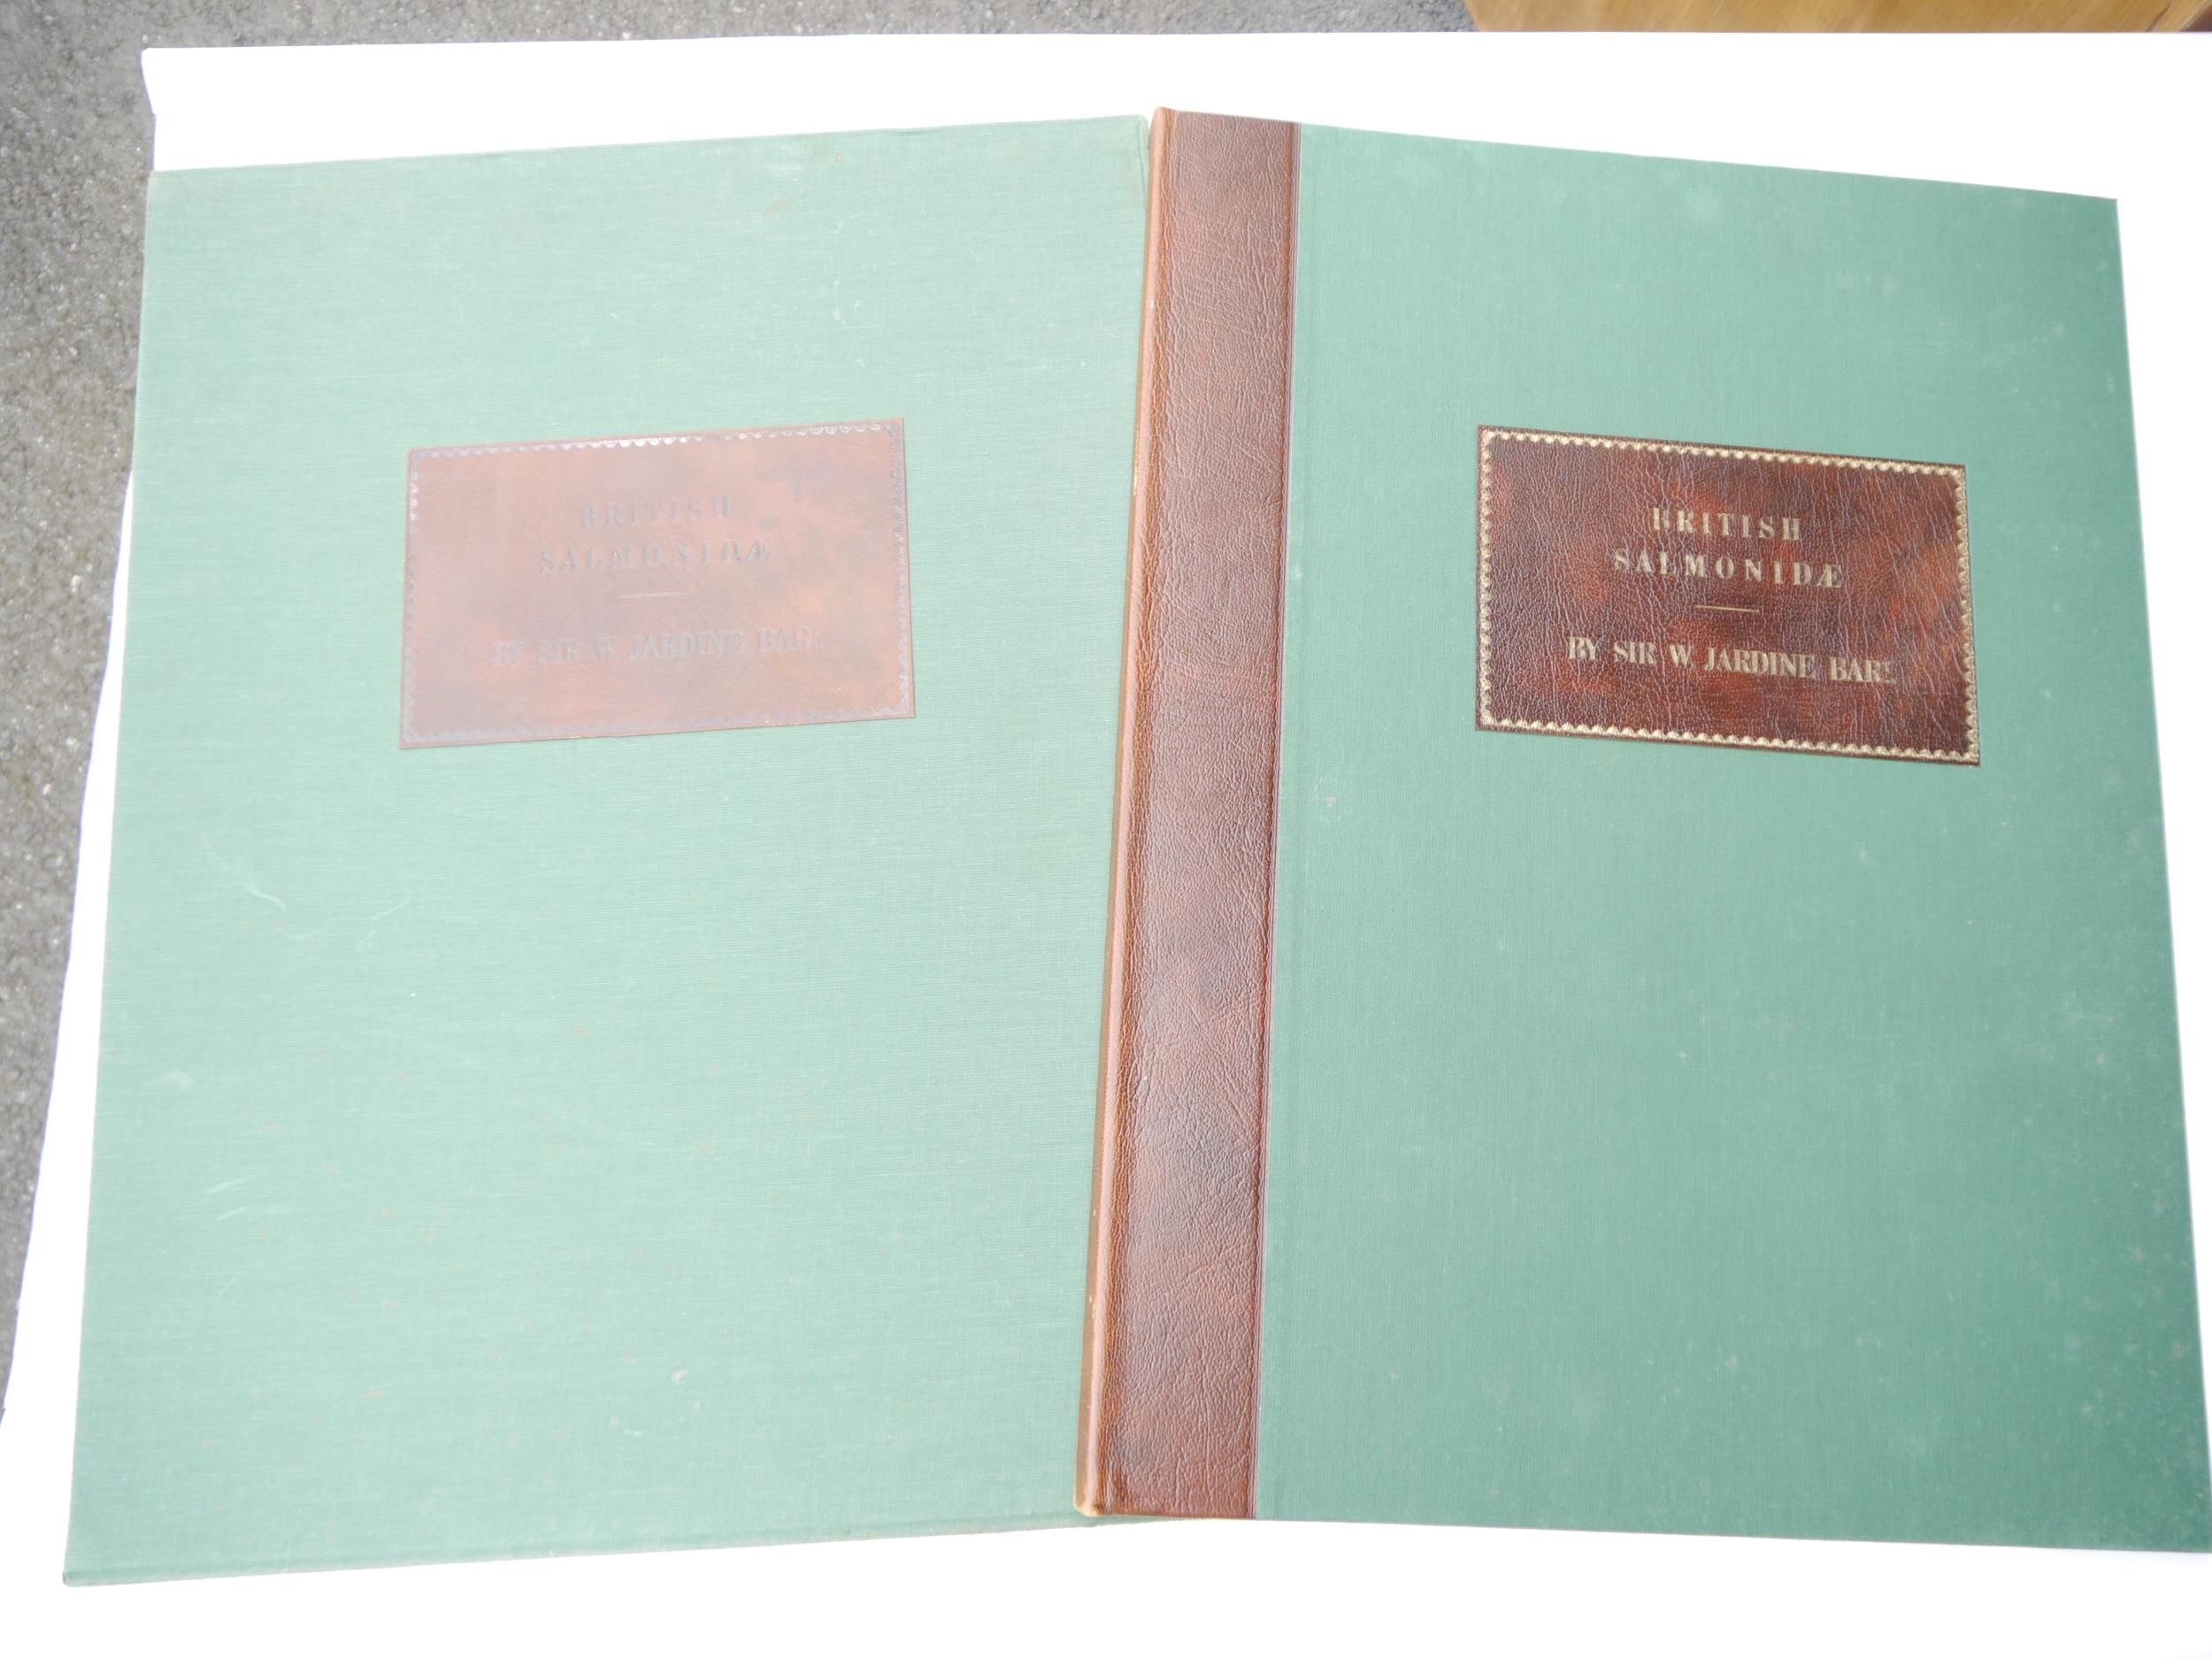 'British Salmonidae' by Sir William Jardine. Bart, elephant folio limited edition, one of 500 copies - Image 5 of 5